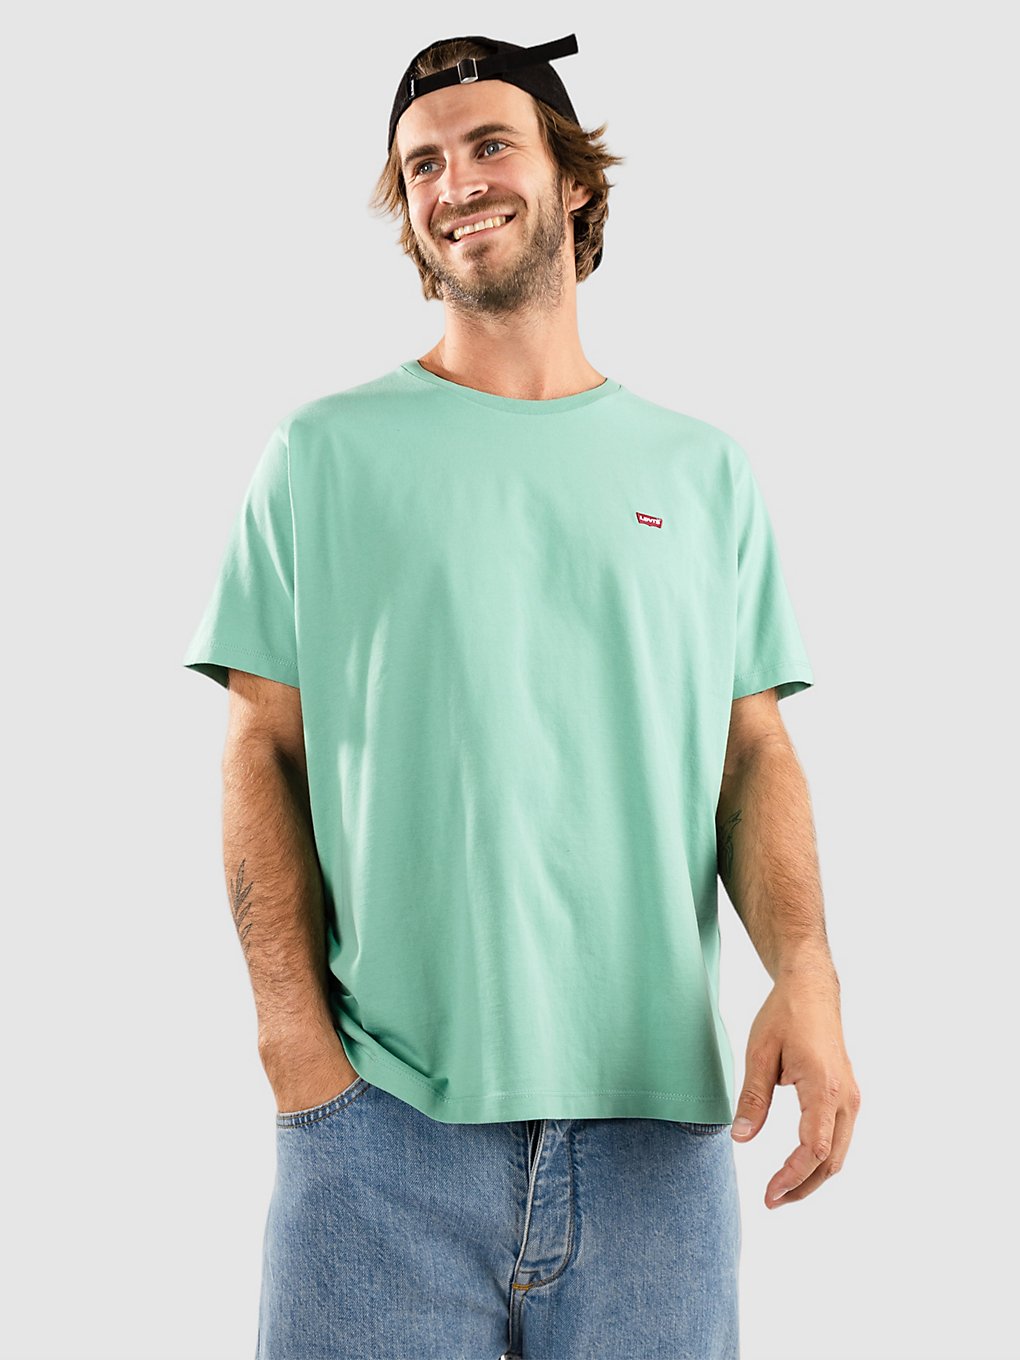 Levi's Original Hm T-Shirt wasabi kaufen